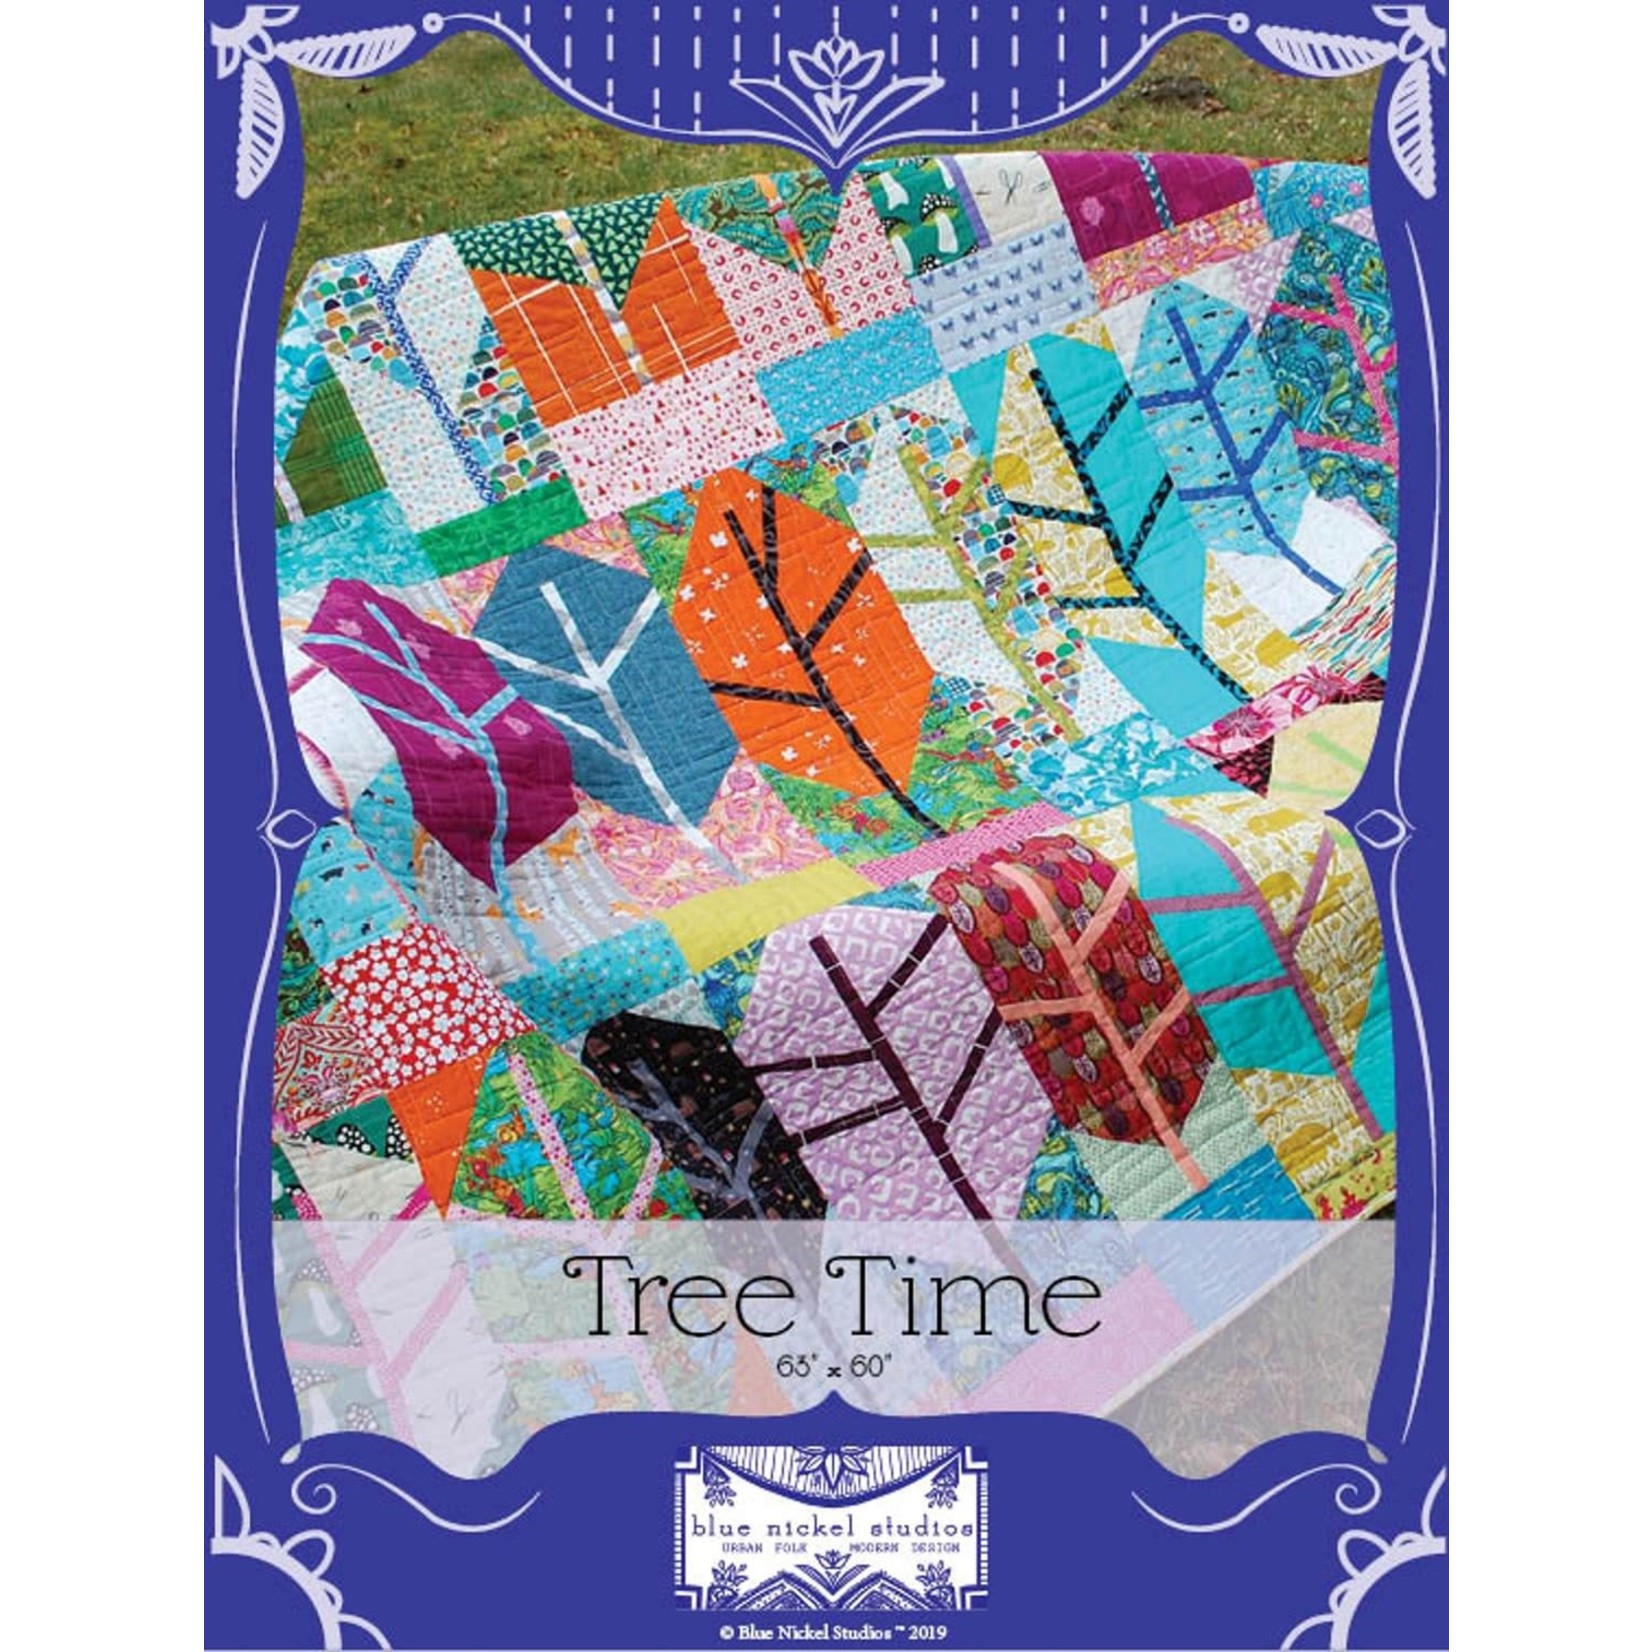 Blue Nickle Studios Tree Time Pattern